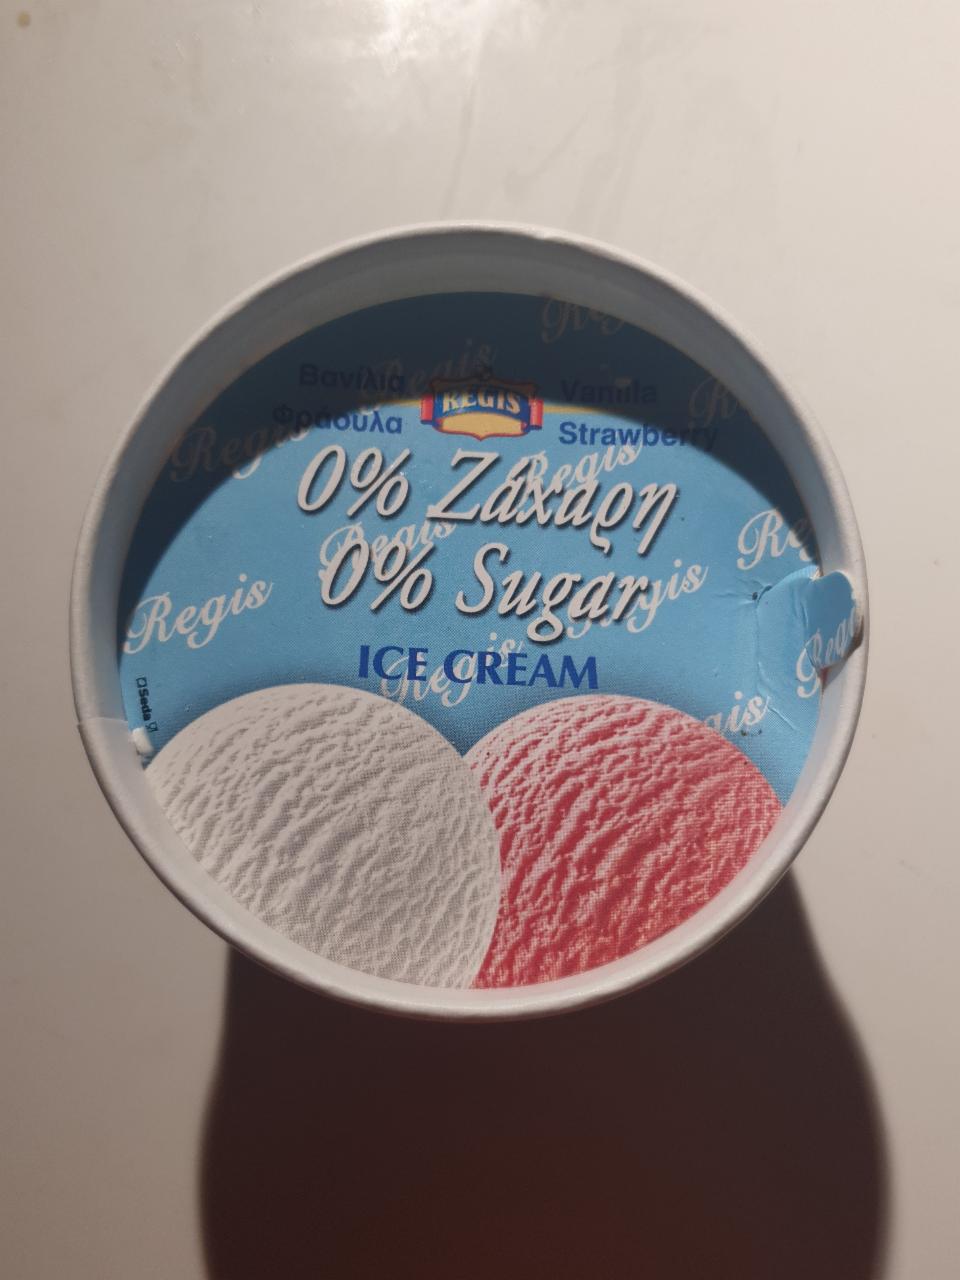 Фото - Мороженое 0% сахара Regis